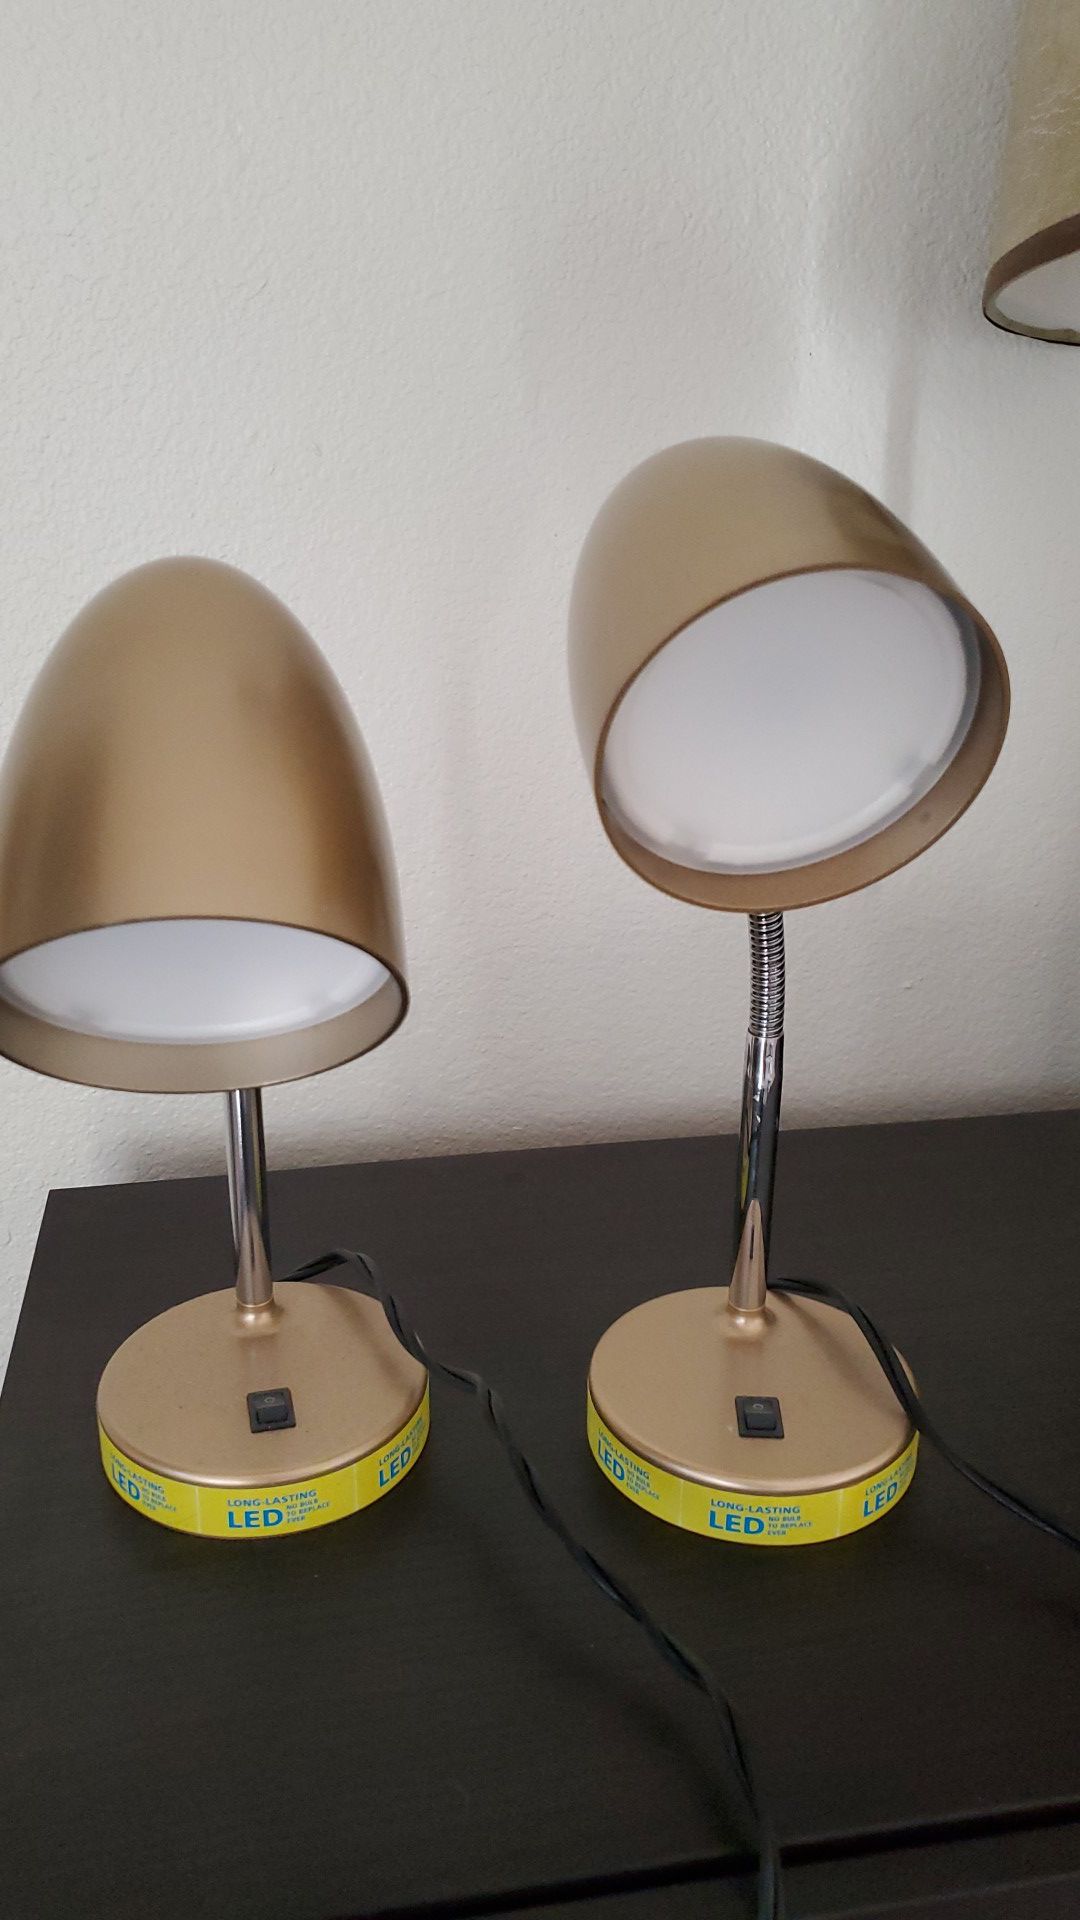 2 Led Desk Lamps